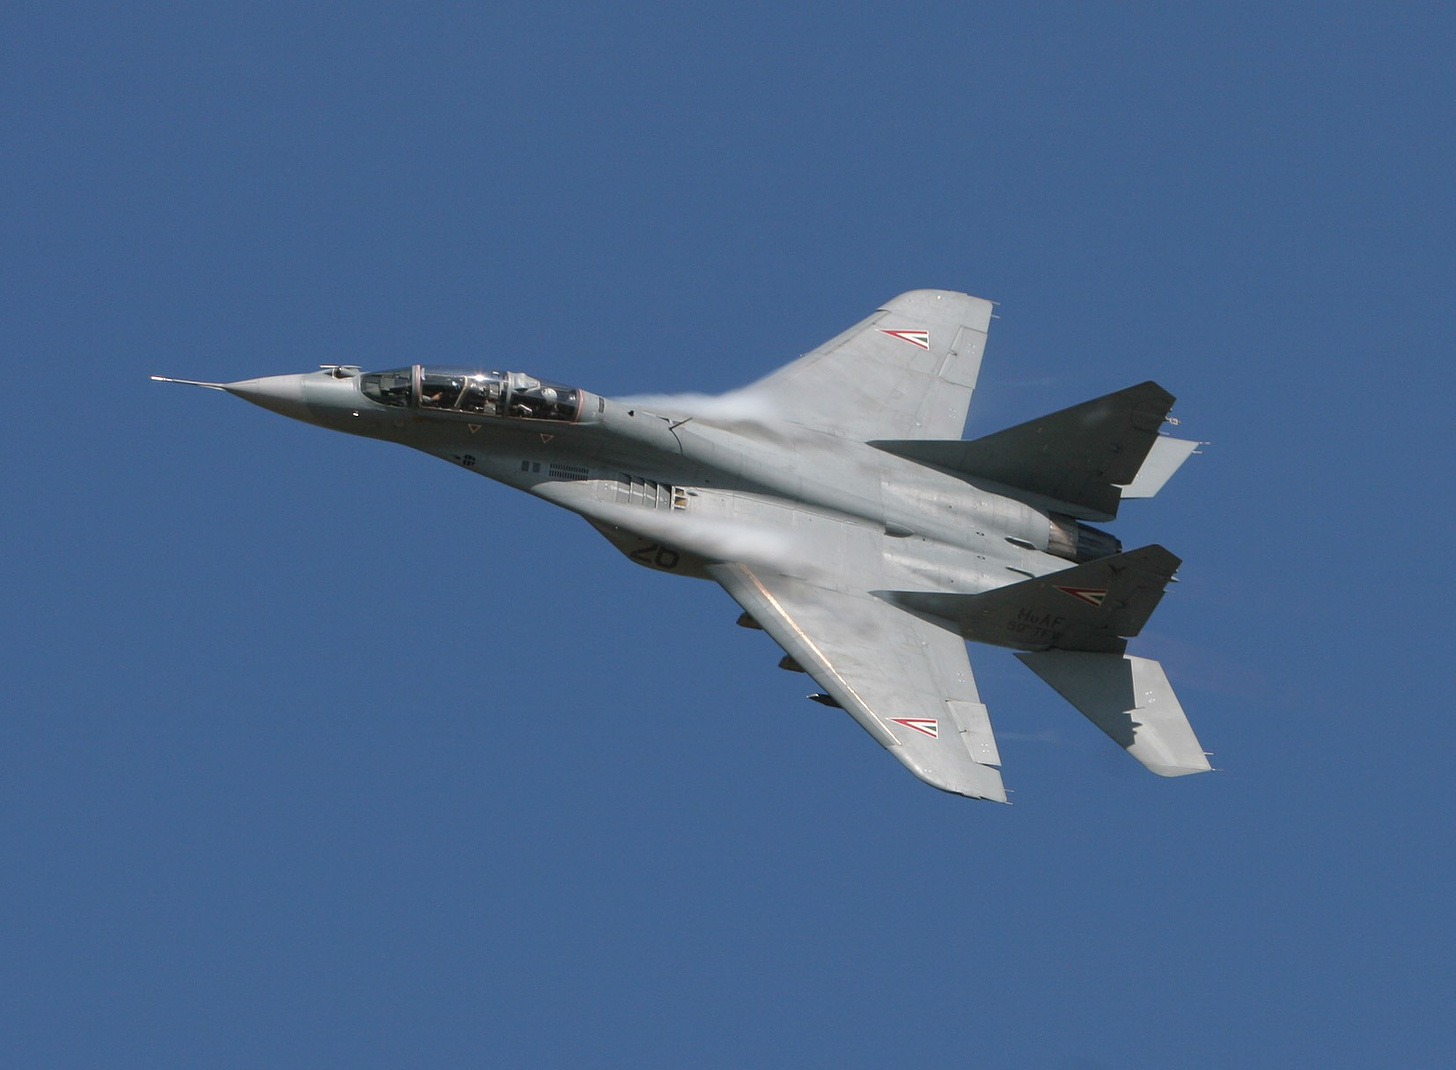 Mikojan-Goerevitsj MiG-29 - Wikipedia